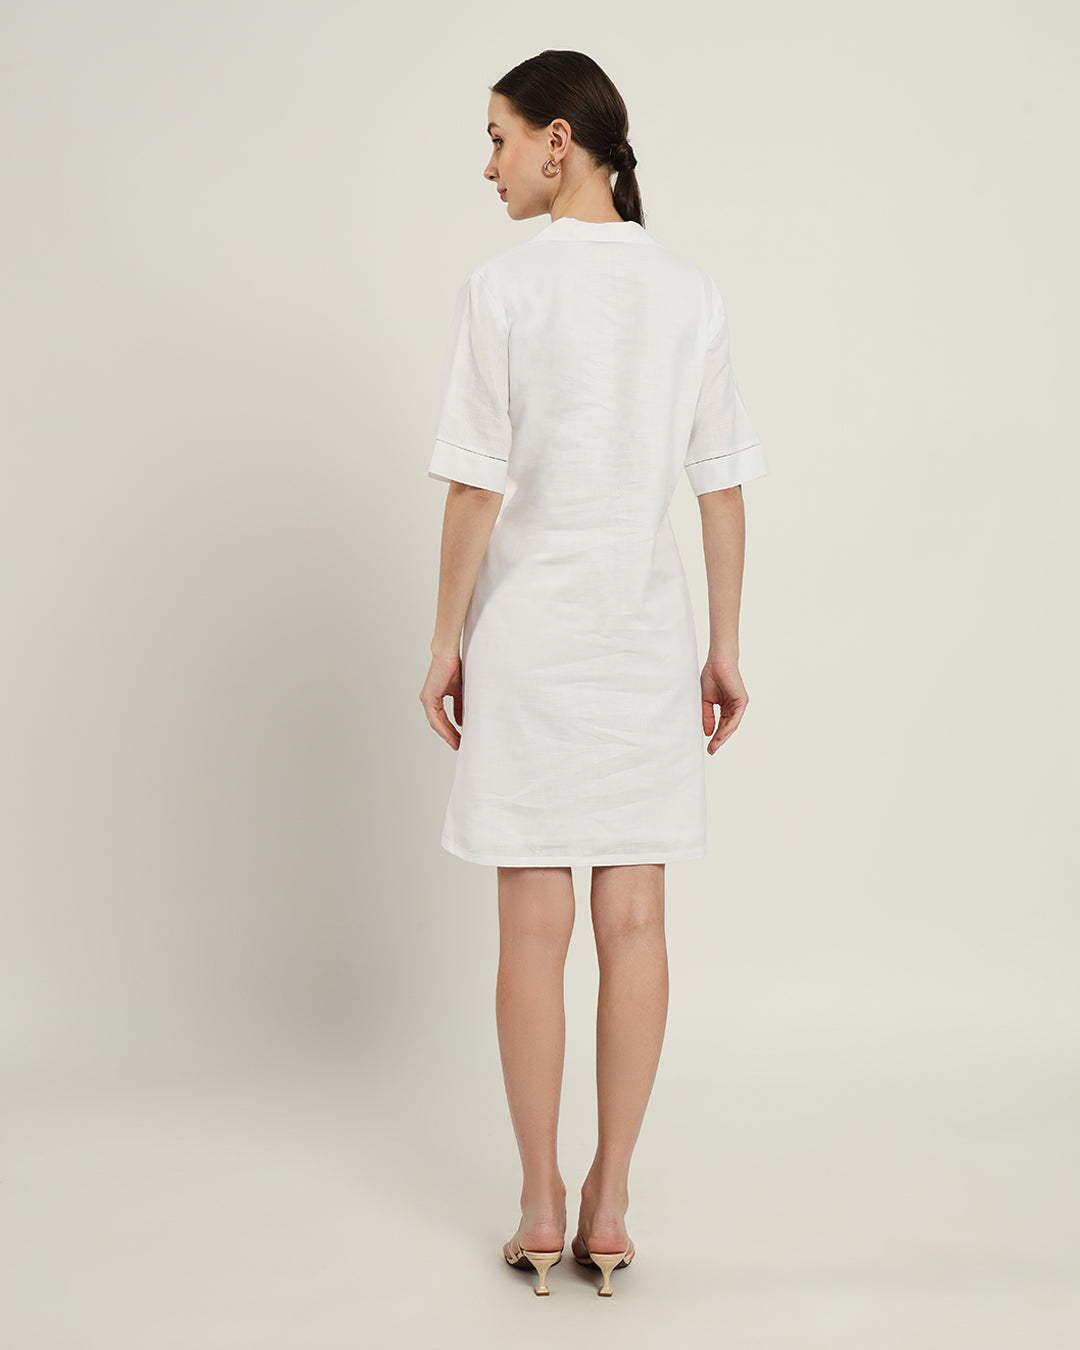 The Ermont Daisy White Linen Dress